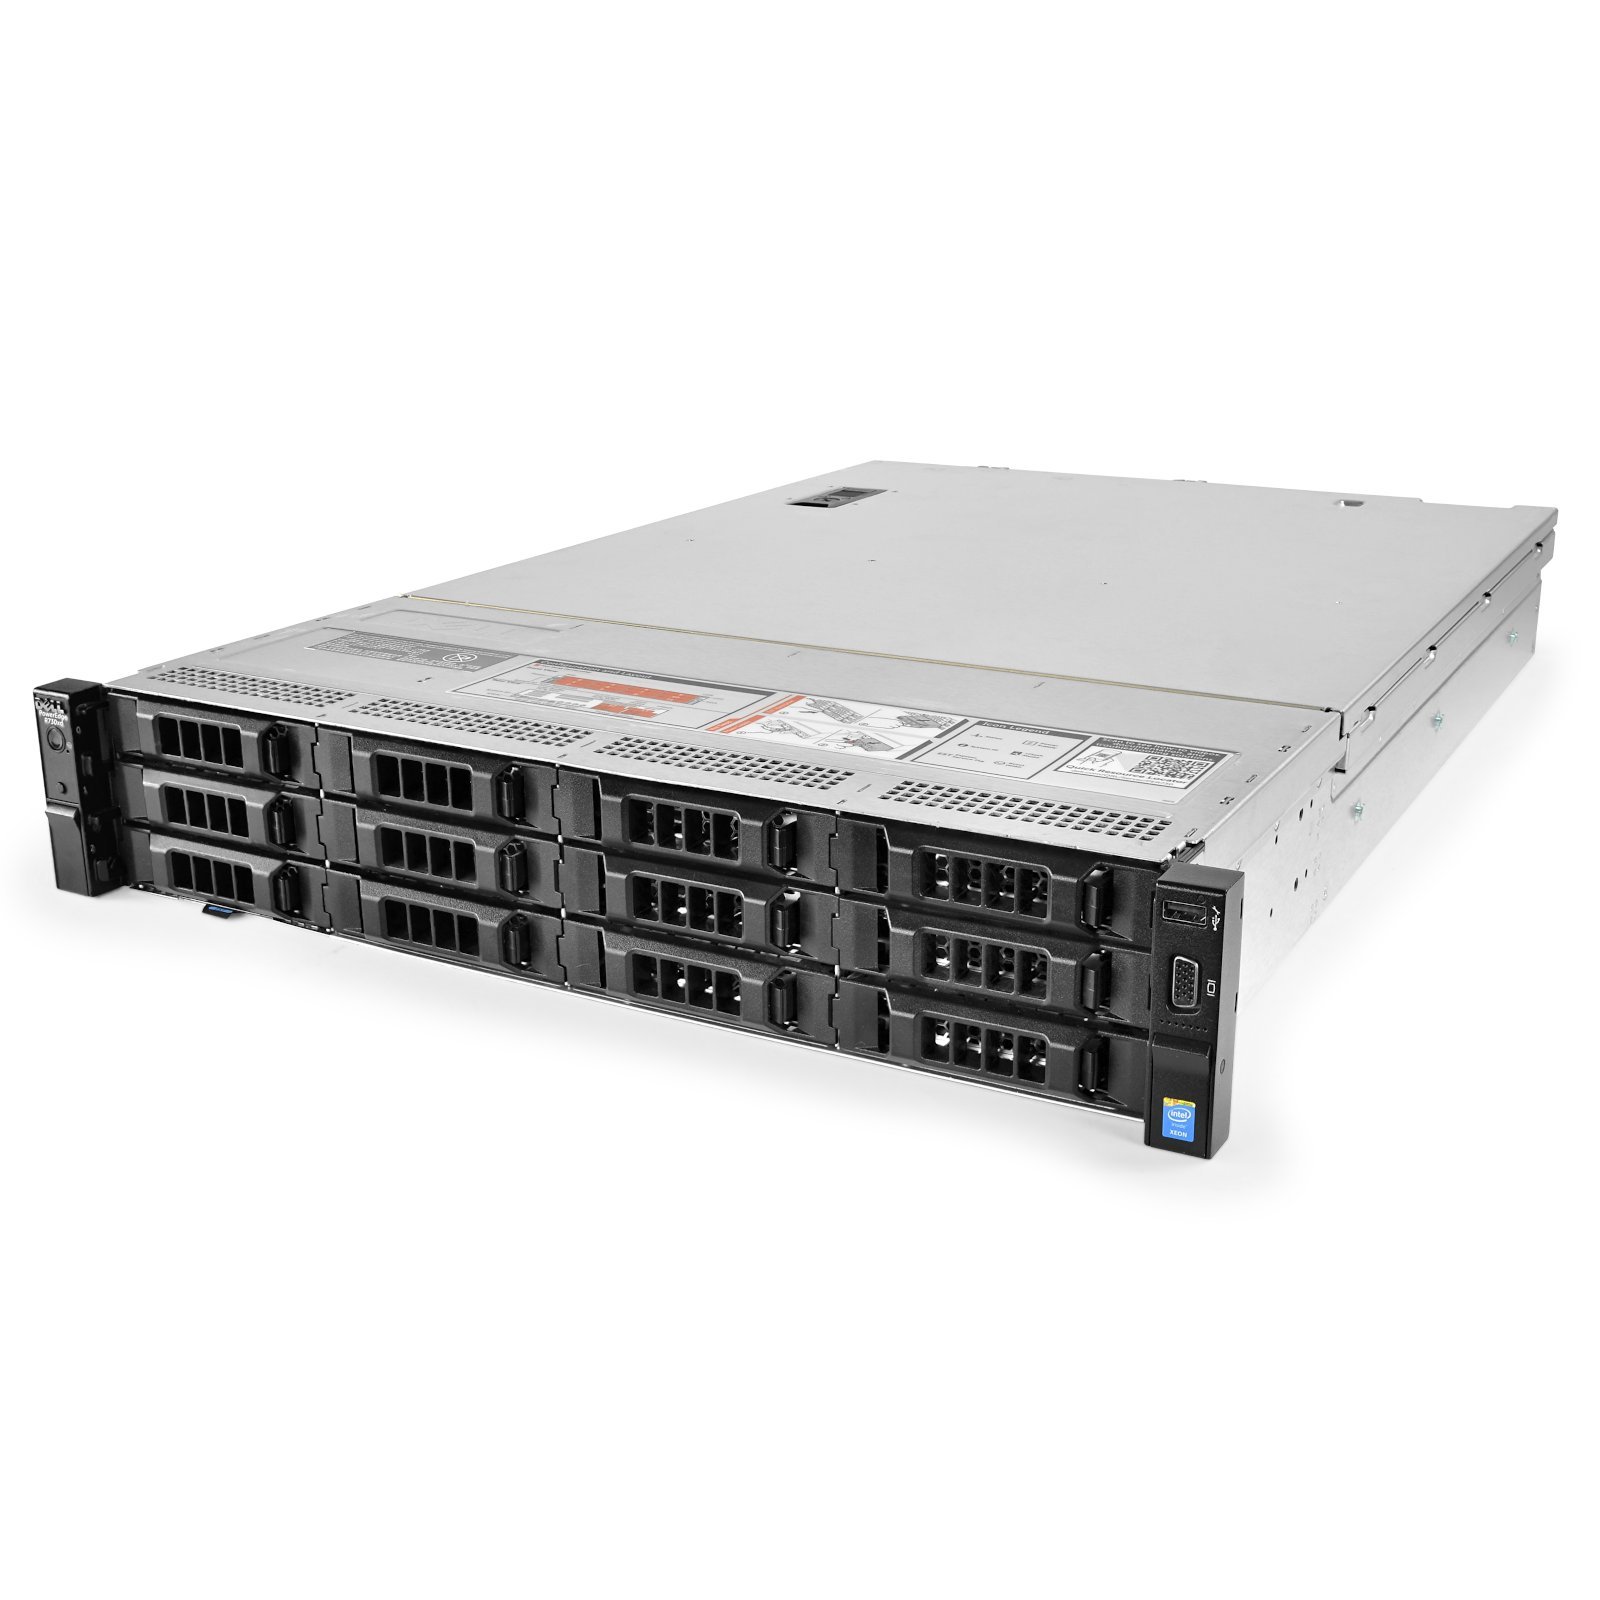 Подробное фото Сервер DELL PowerEdge R730XD Xeon 2x E5-2667v3 128Gb 2133P DDR4 12x noHDD 3.5", SAS RAID Perc H730 mini, 1024Mb, 2*PSU 750W